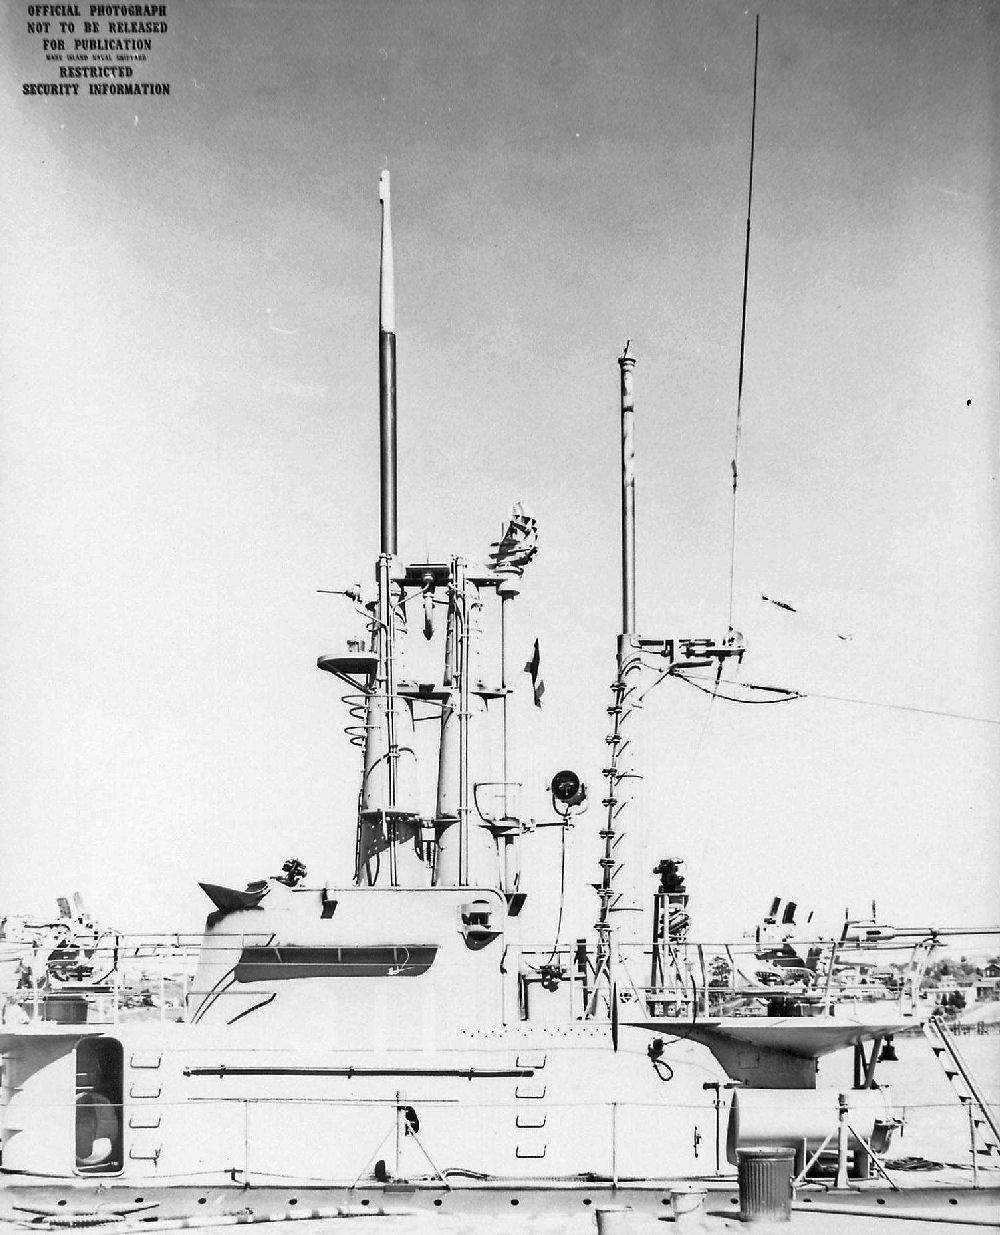 USS Archerfish at Mare Island Navy Yard, Vallejo, California, United States, 25 Mar 1952, photo 2 of 3